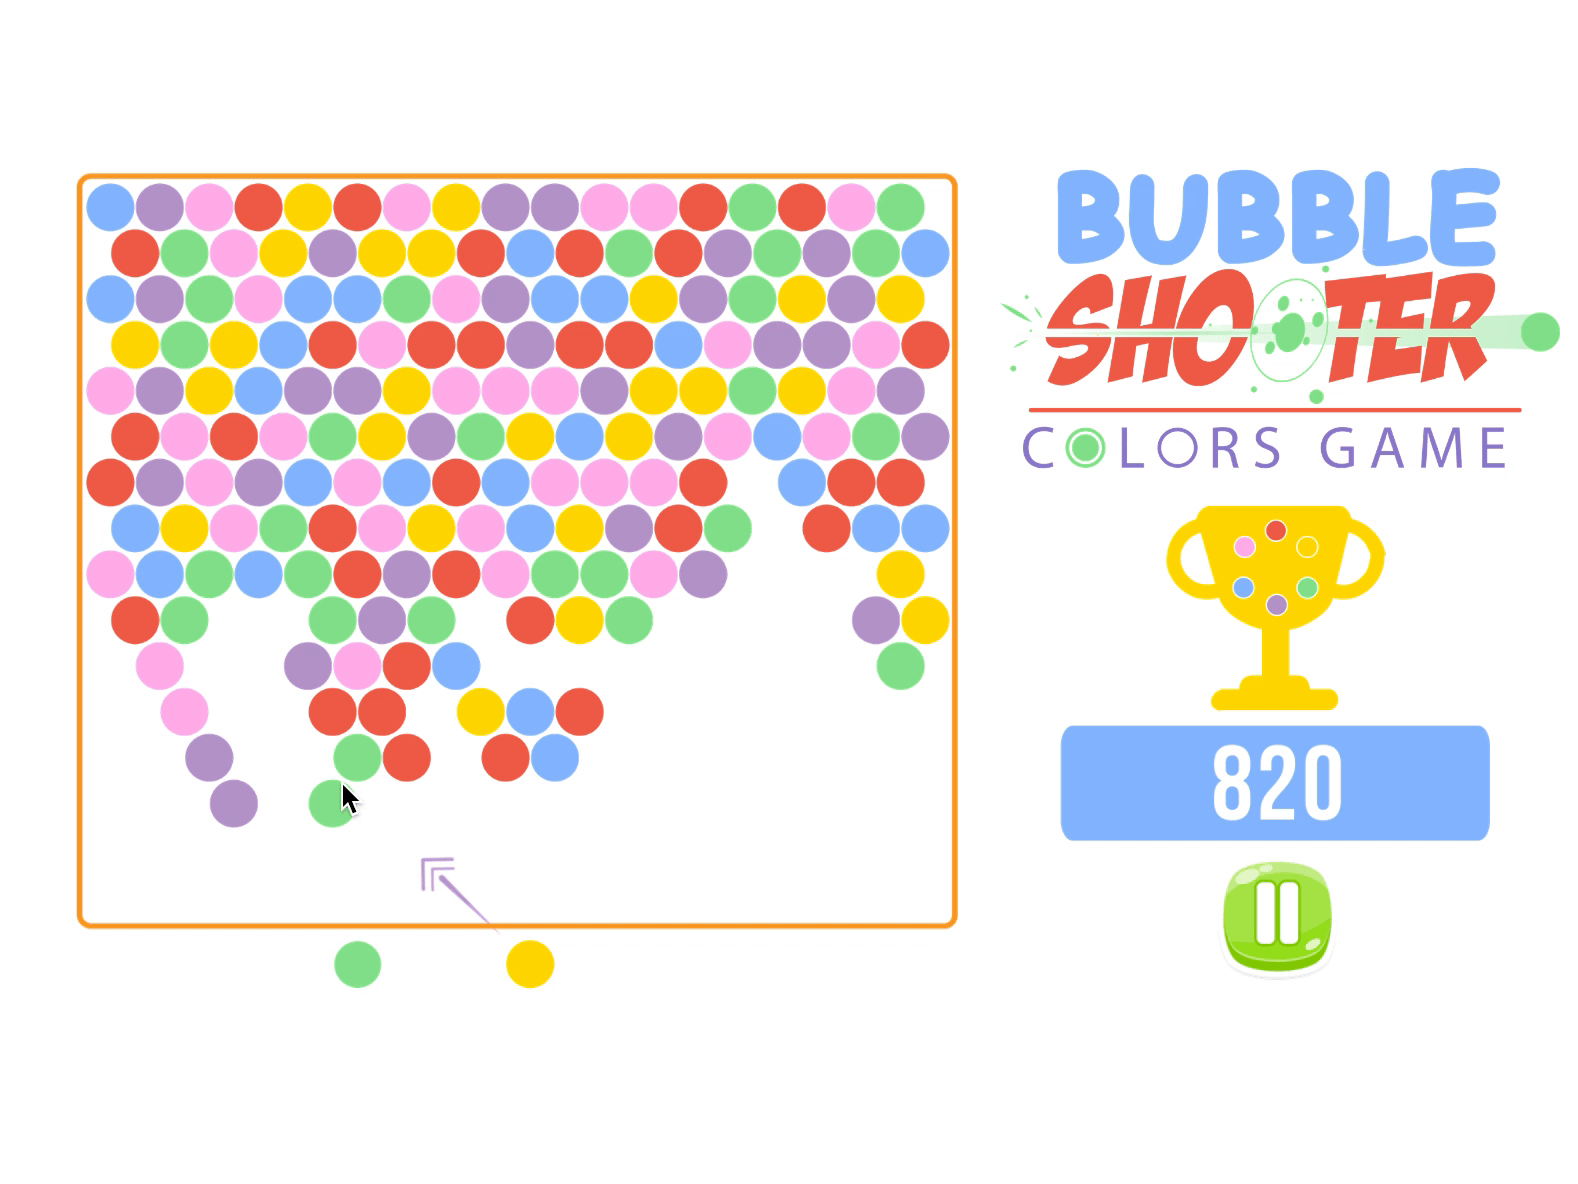 Bubble Shooter Colors Game Screenshot 2